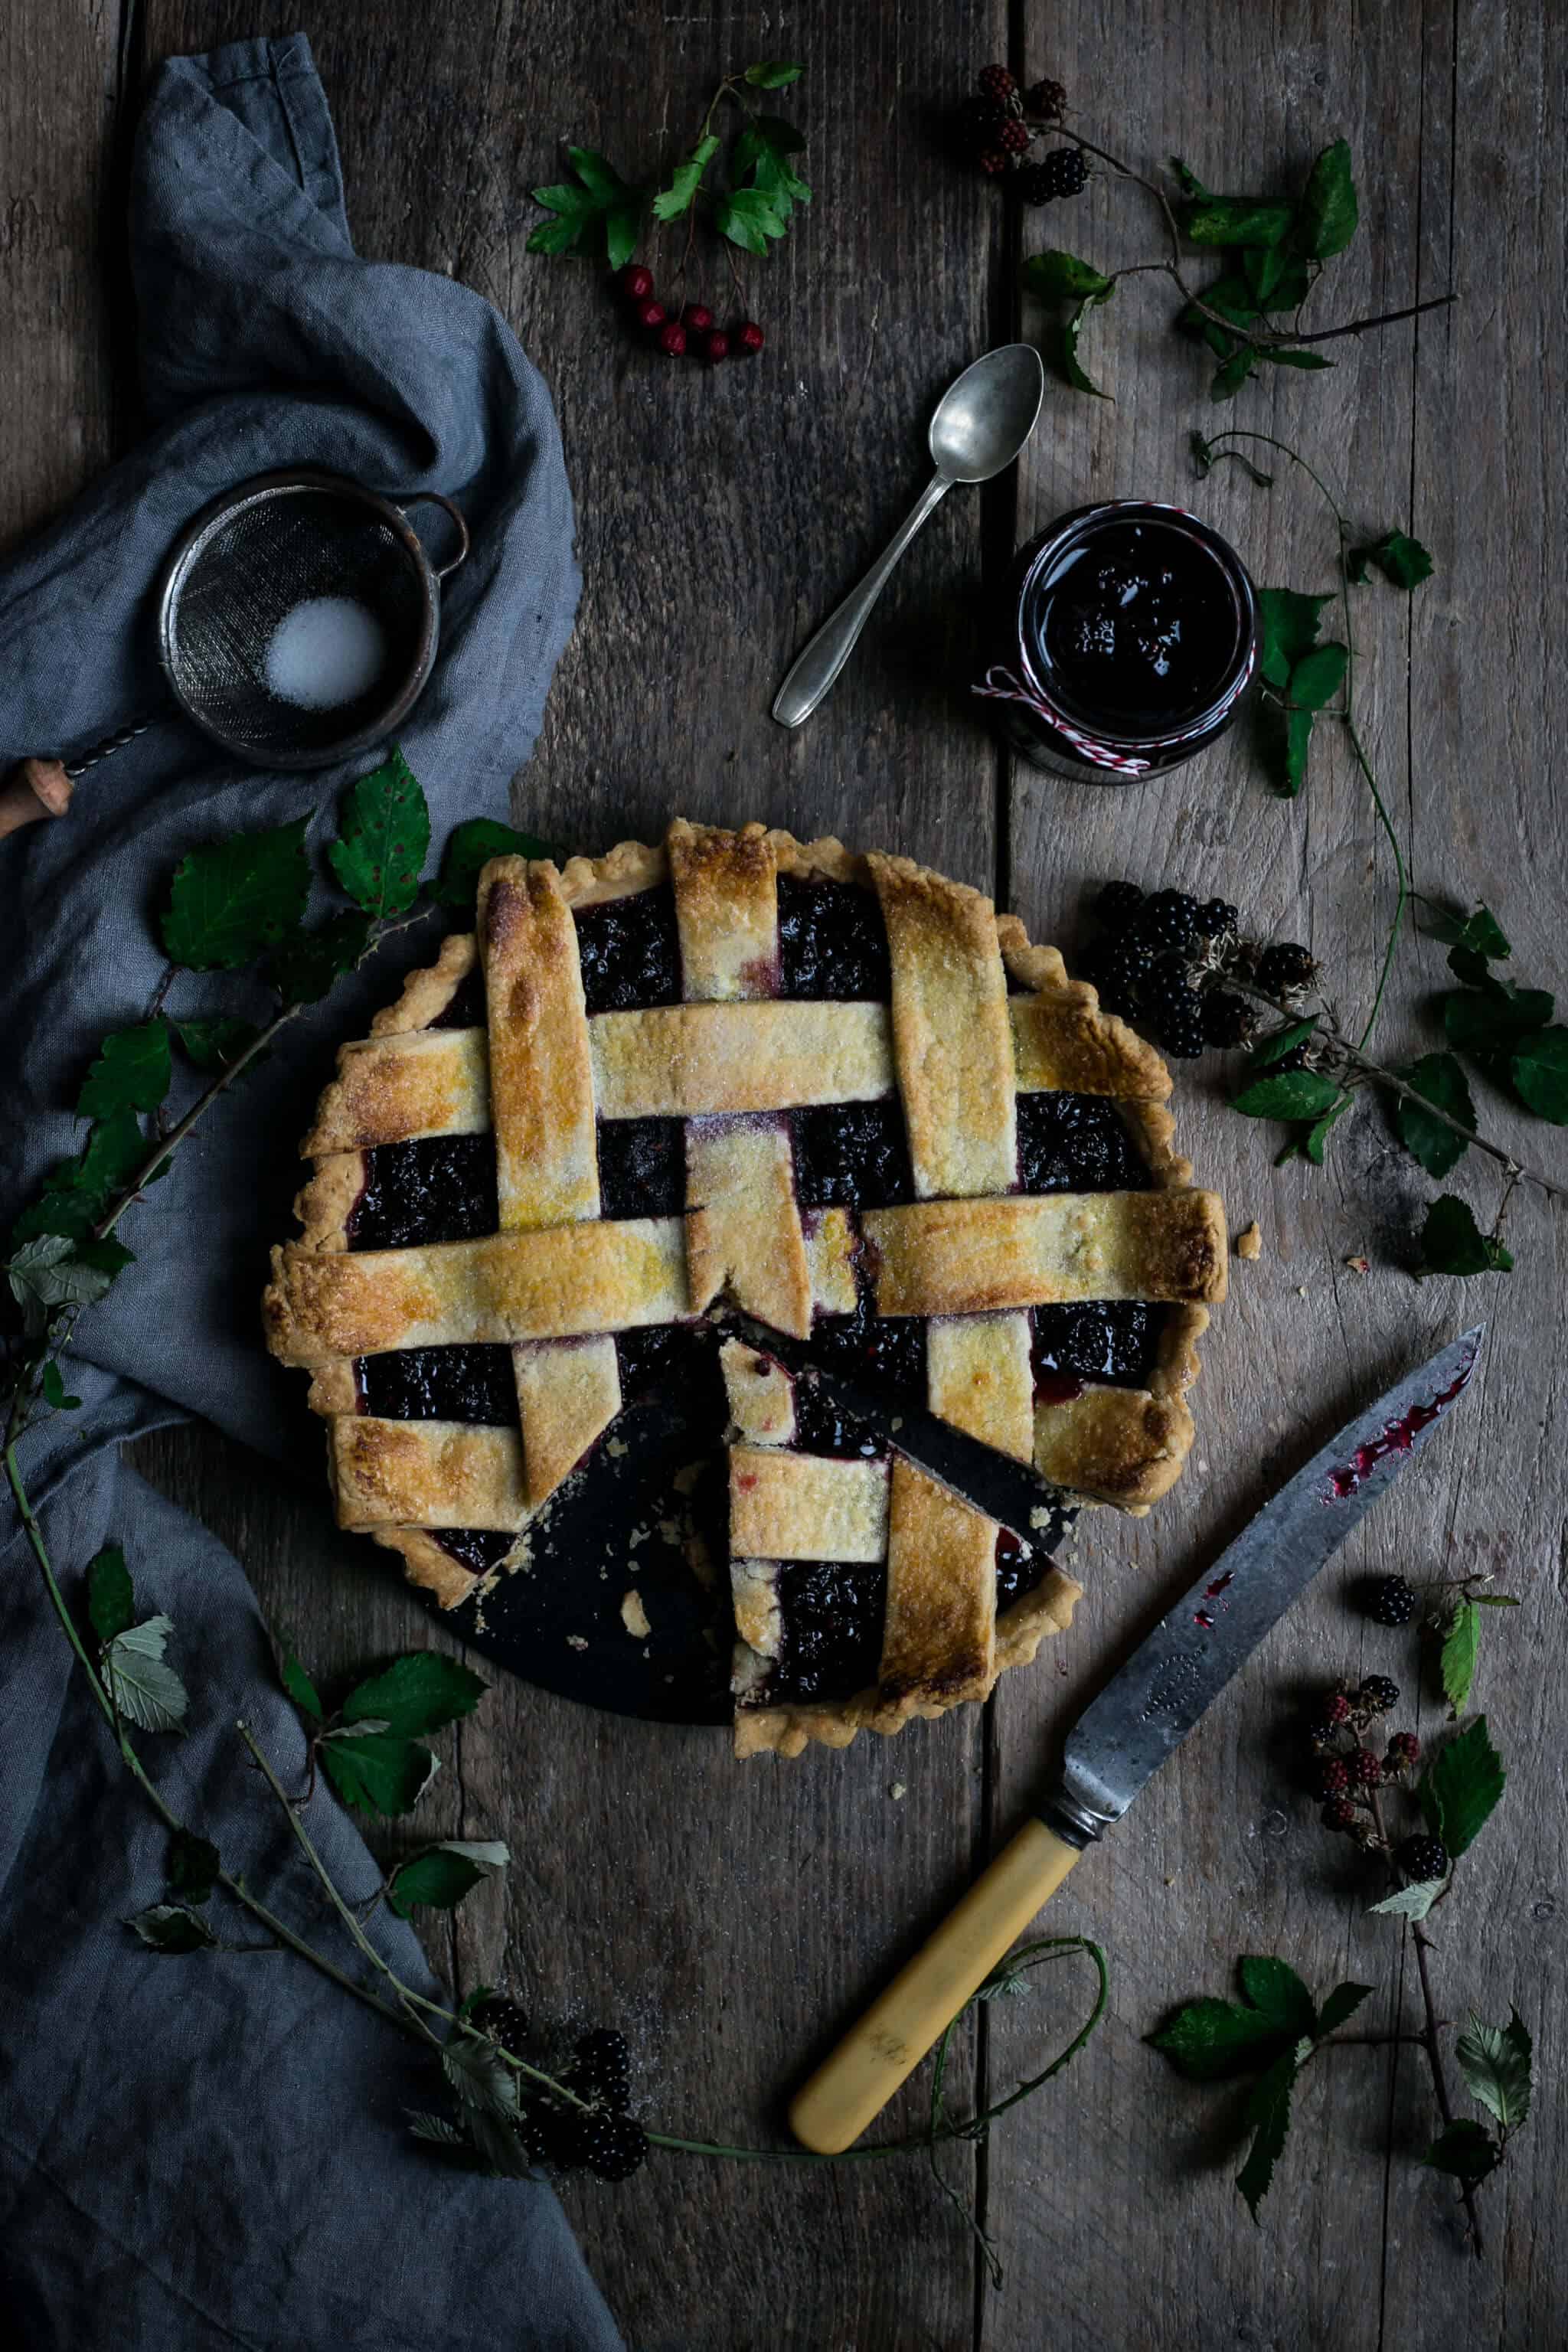 Beautiful blackberry jam and lattice tart | via @annabanana.co